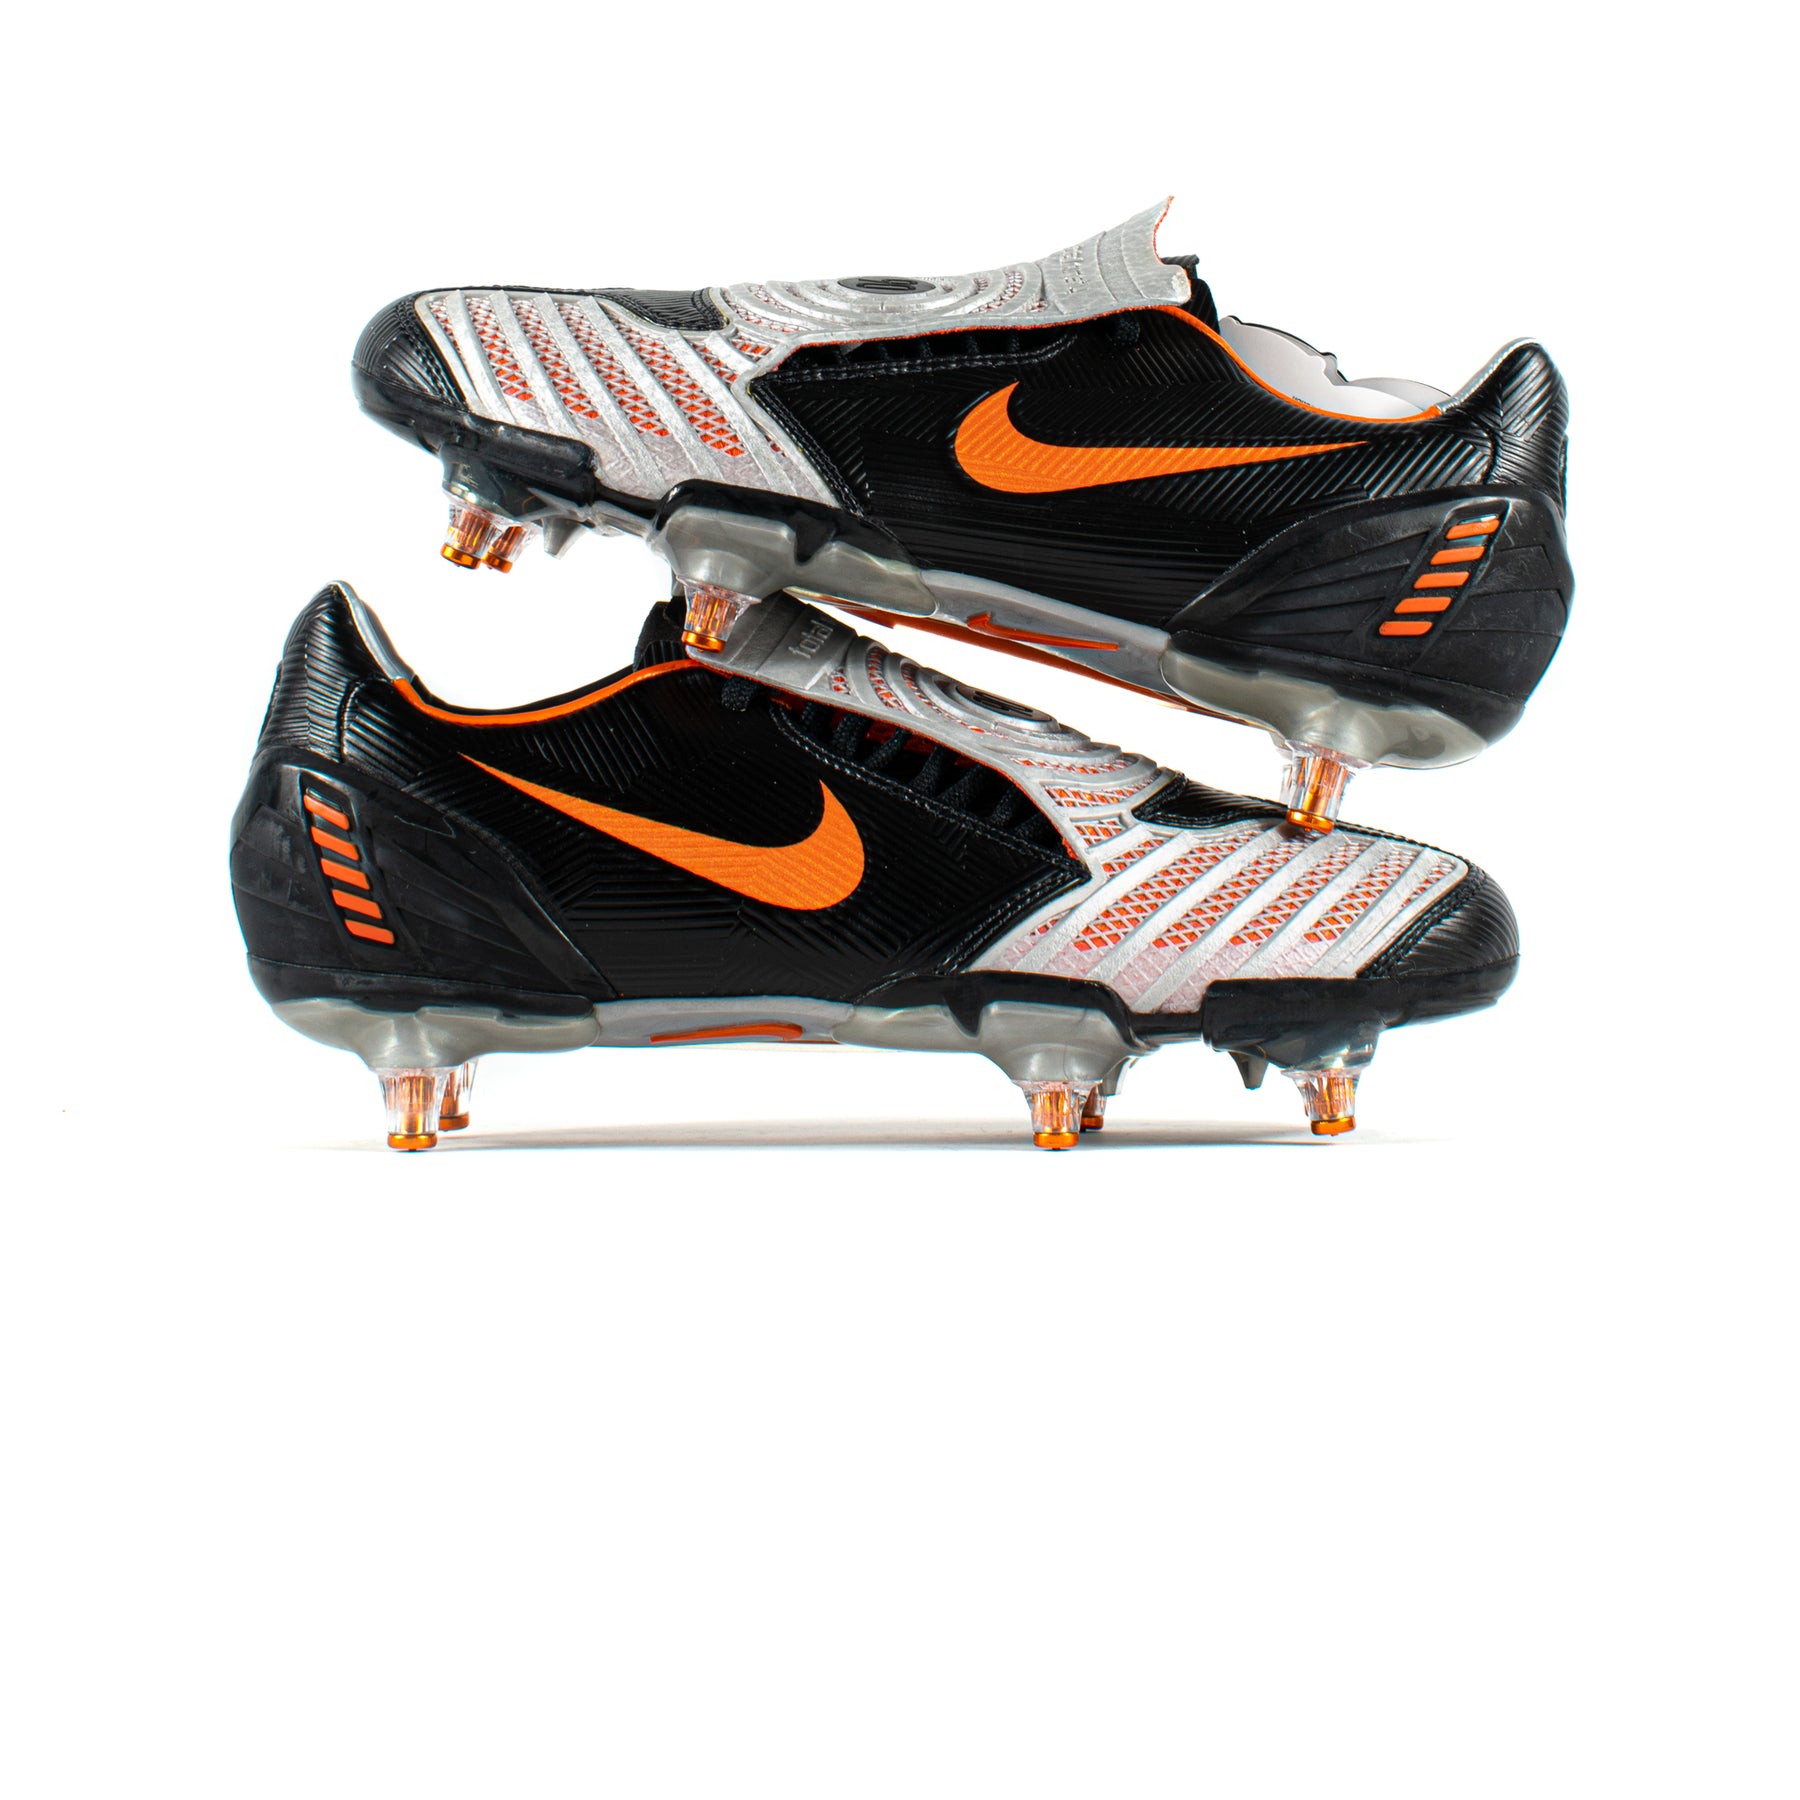 Nike 90 T90 Laser II Black SG – Soccer Cleats